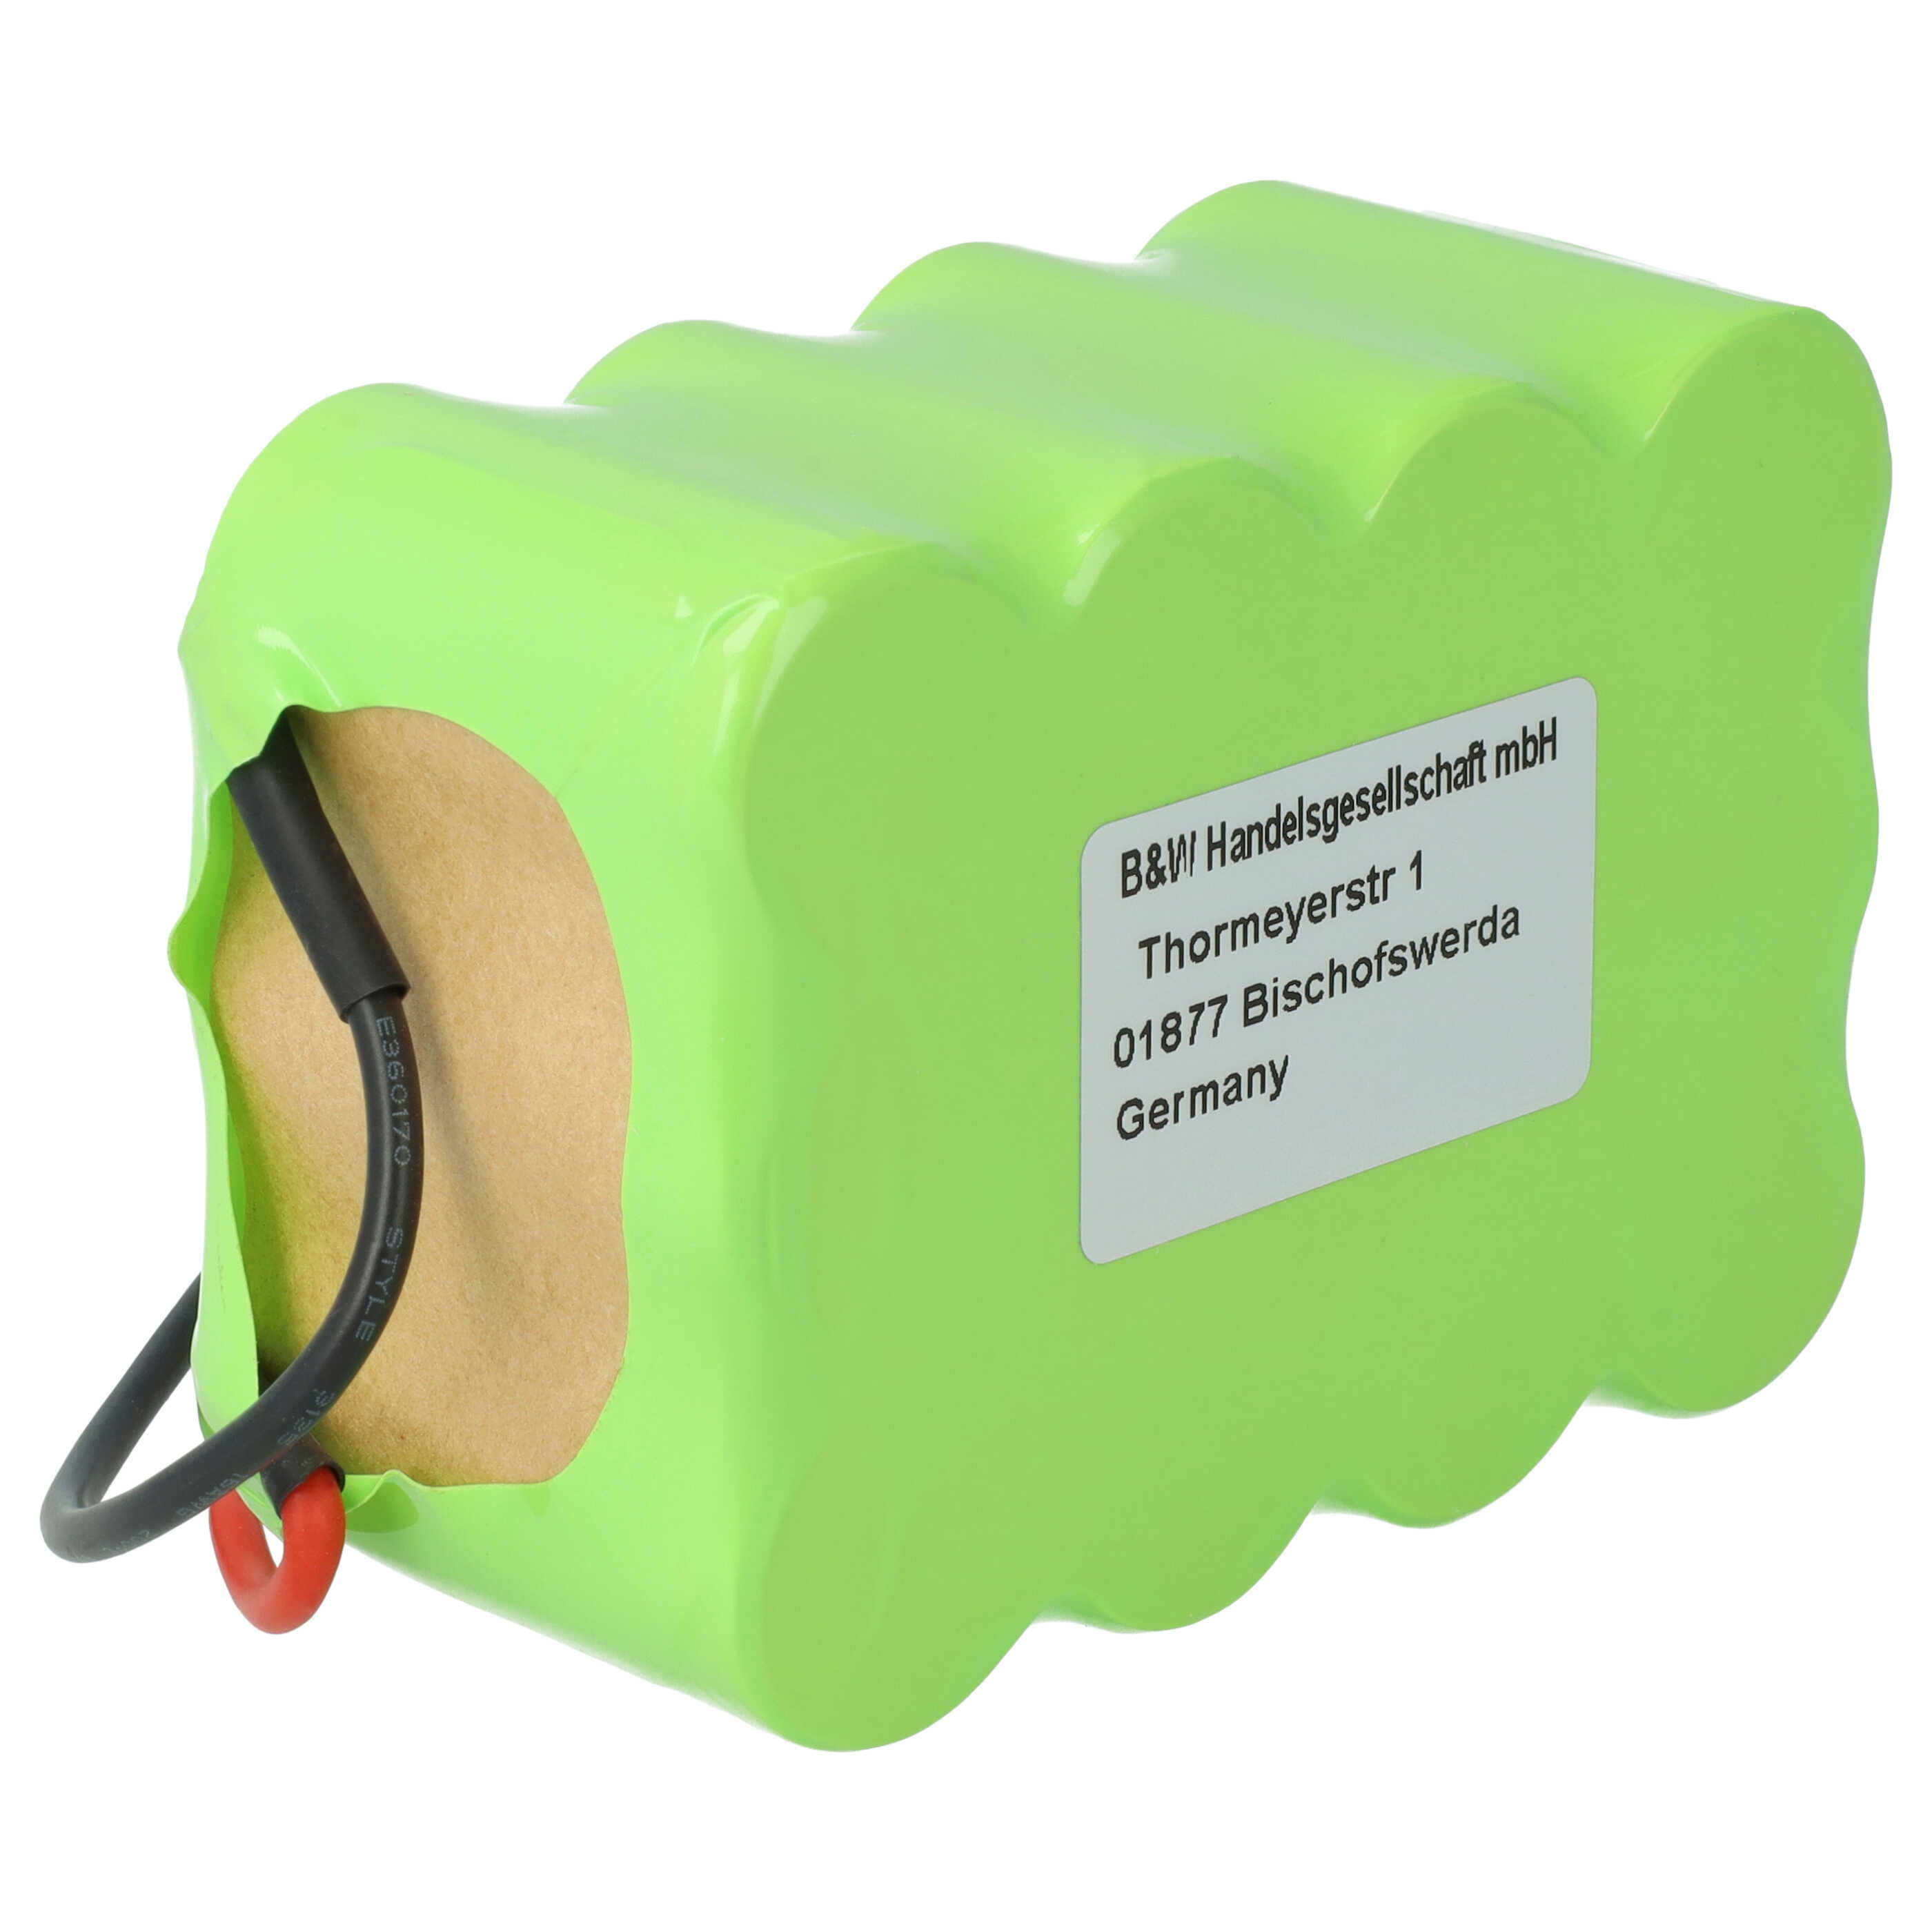 Akumulator do odkurzacza zamiennik Bosch FD8901, GP180SCHSV12Y2H, 00751992 - 2500 mAh 14,4 V NiMH